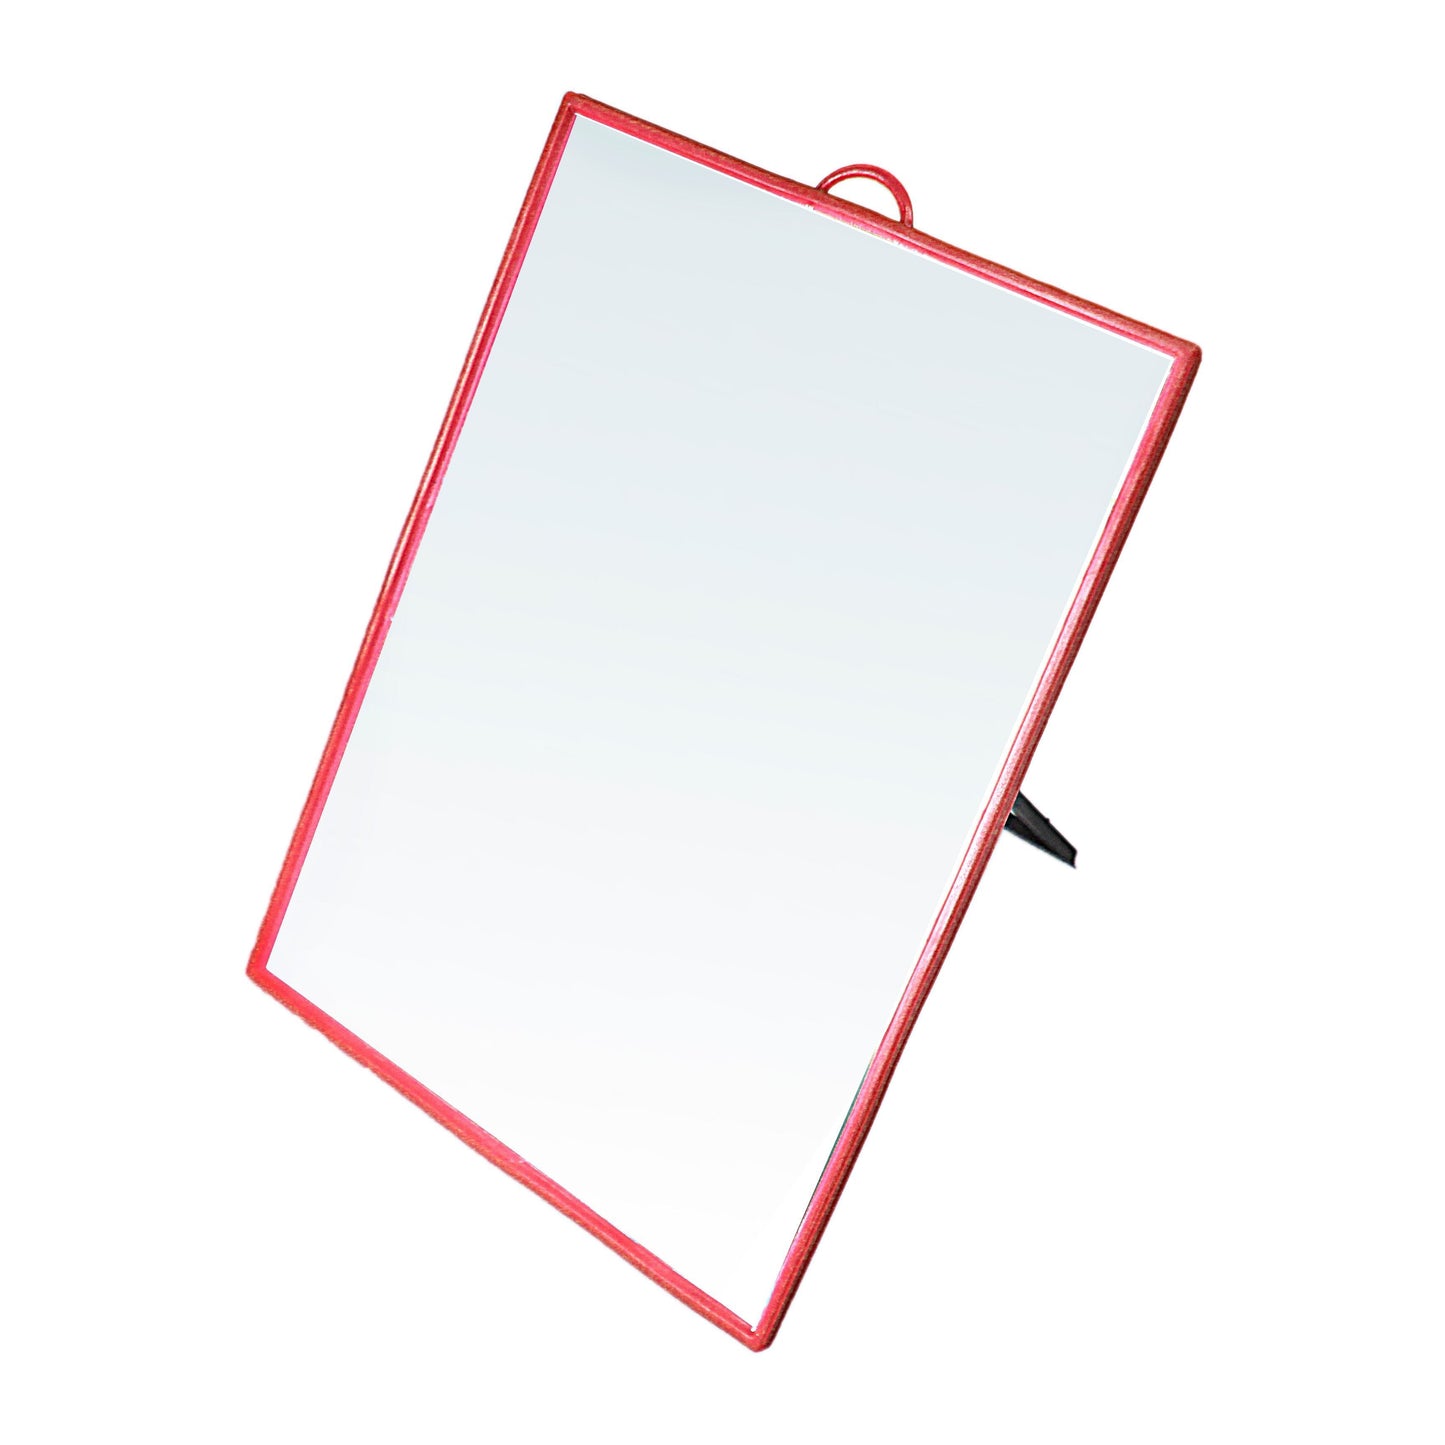 Desk Table Plastic Coloured Border Square Shaped Mirror 18cm x 24cm 0178 (Large Letter Rate)